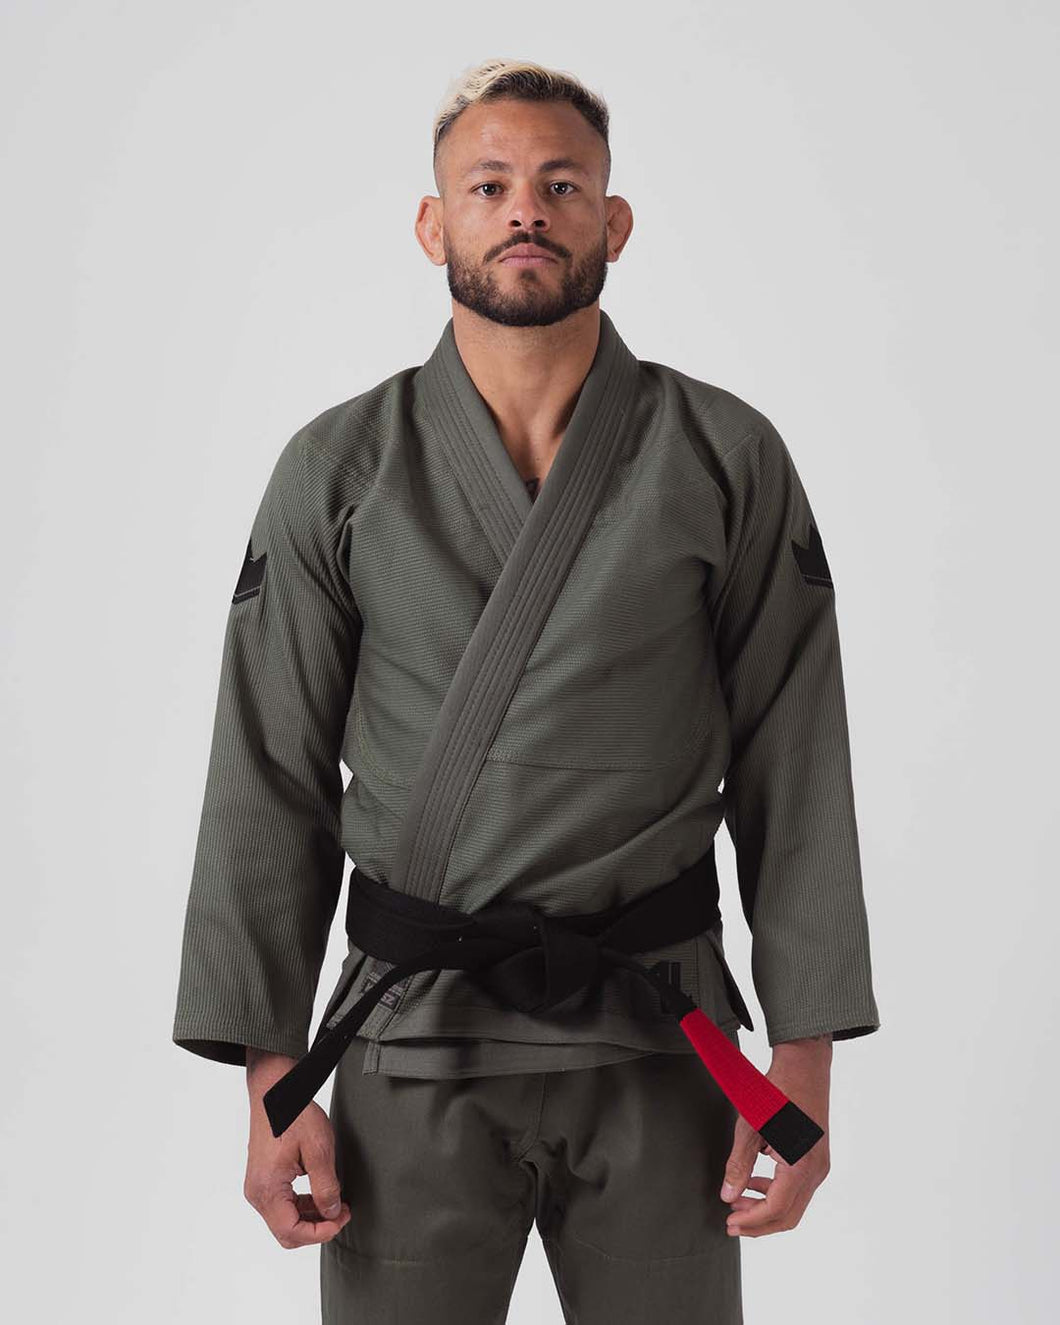 Kimono BJJ (gi) Kingz, o cinturão verde-verde único incluído